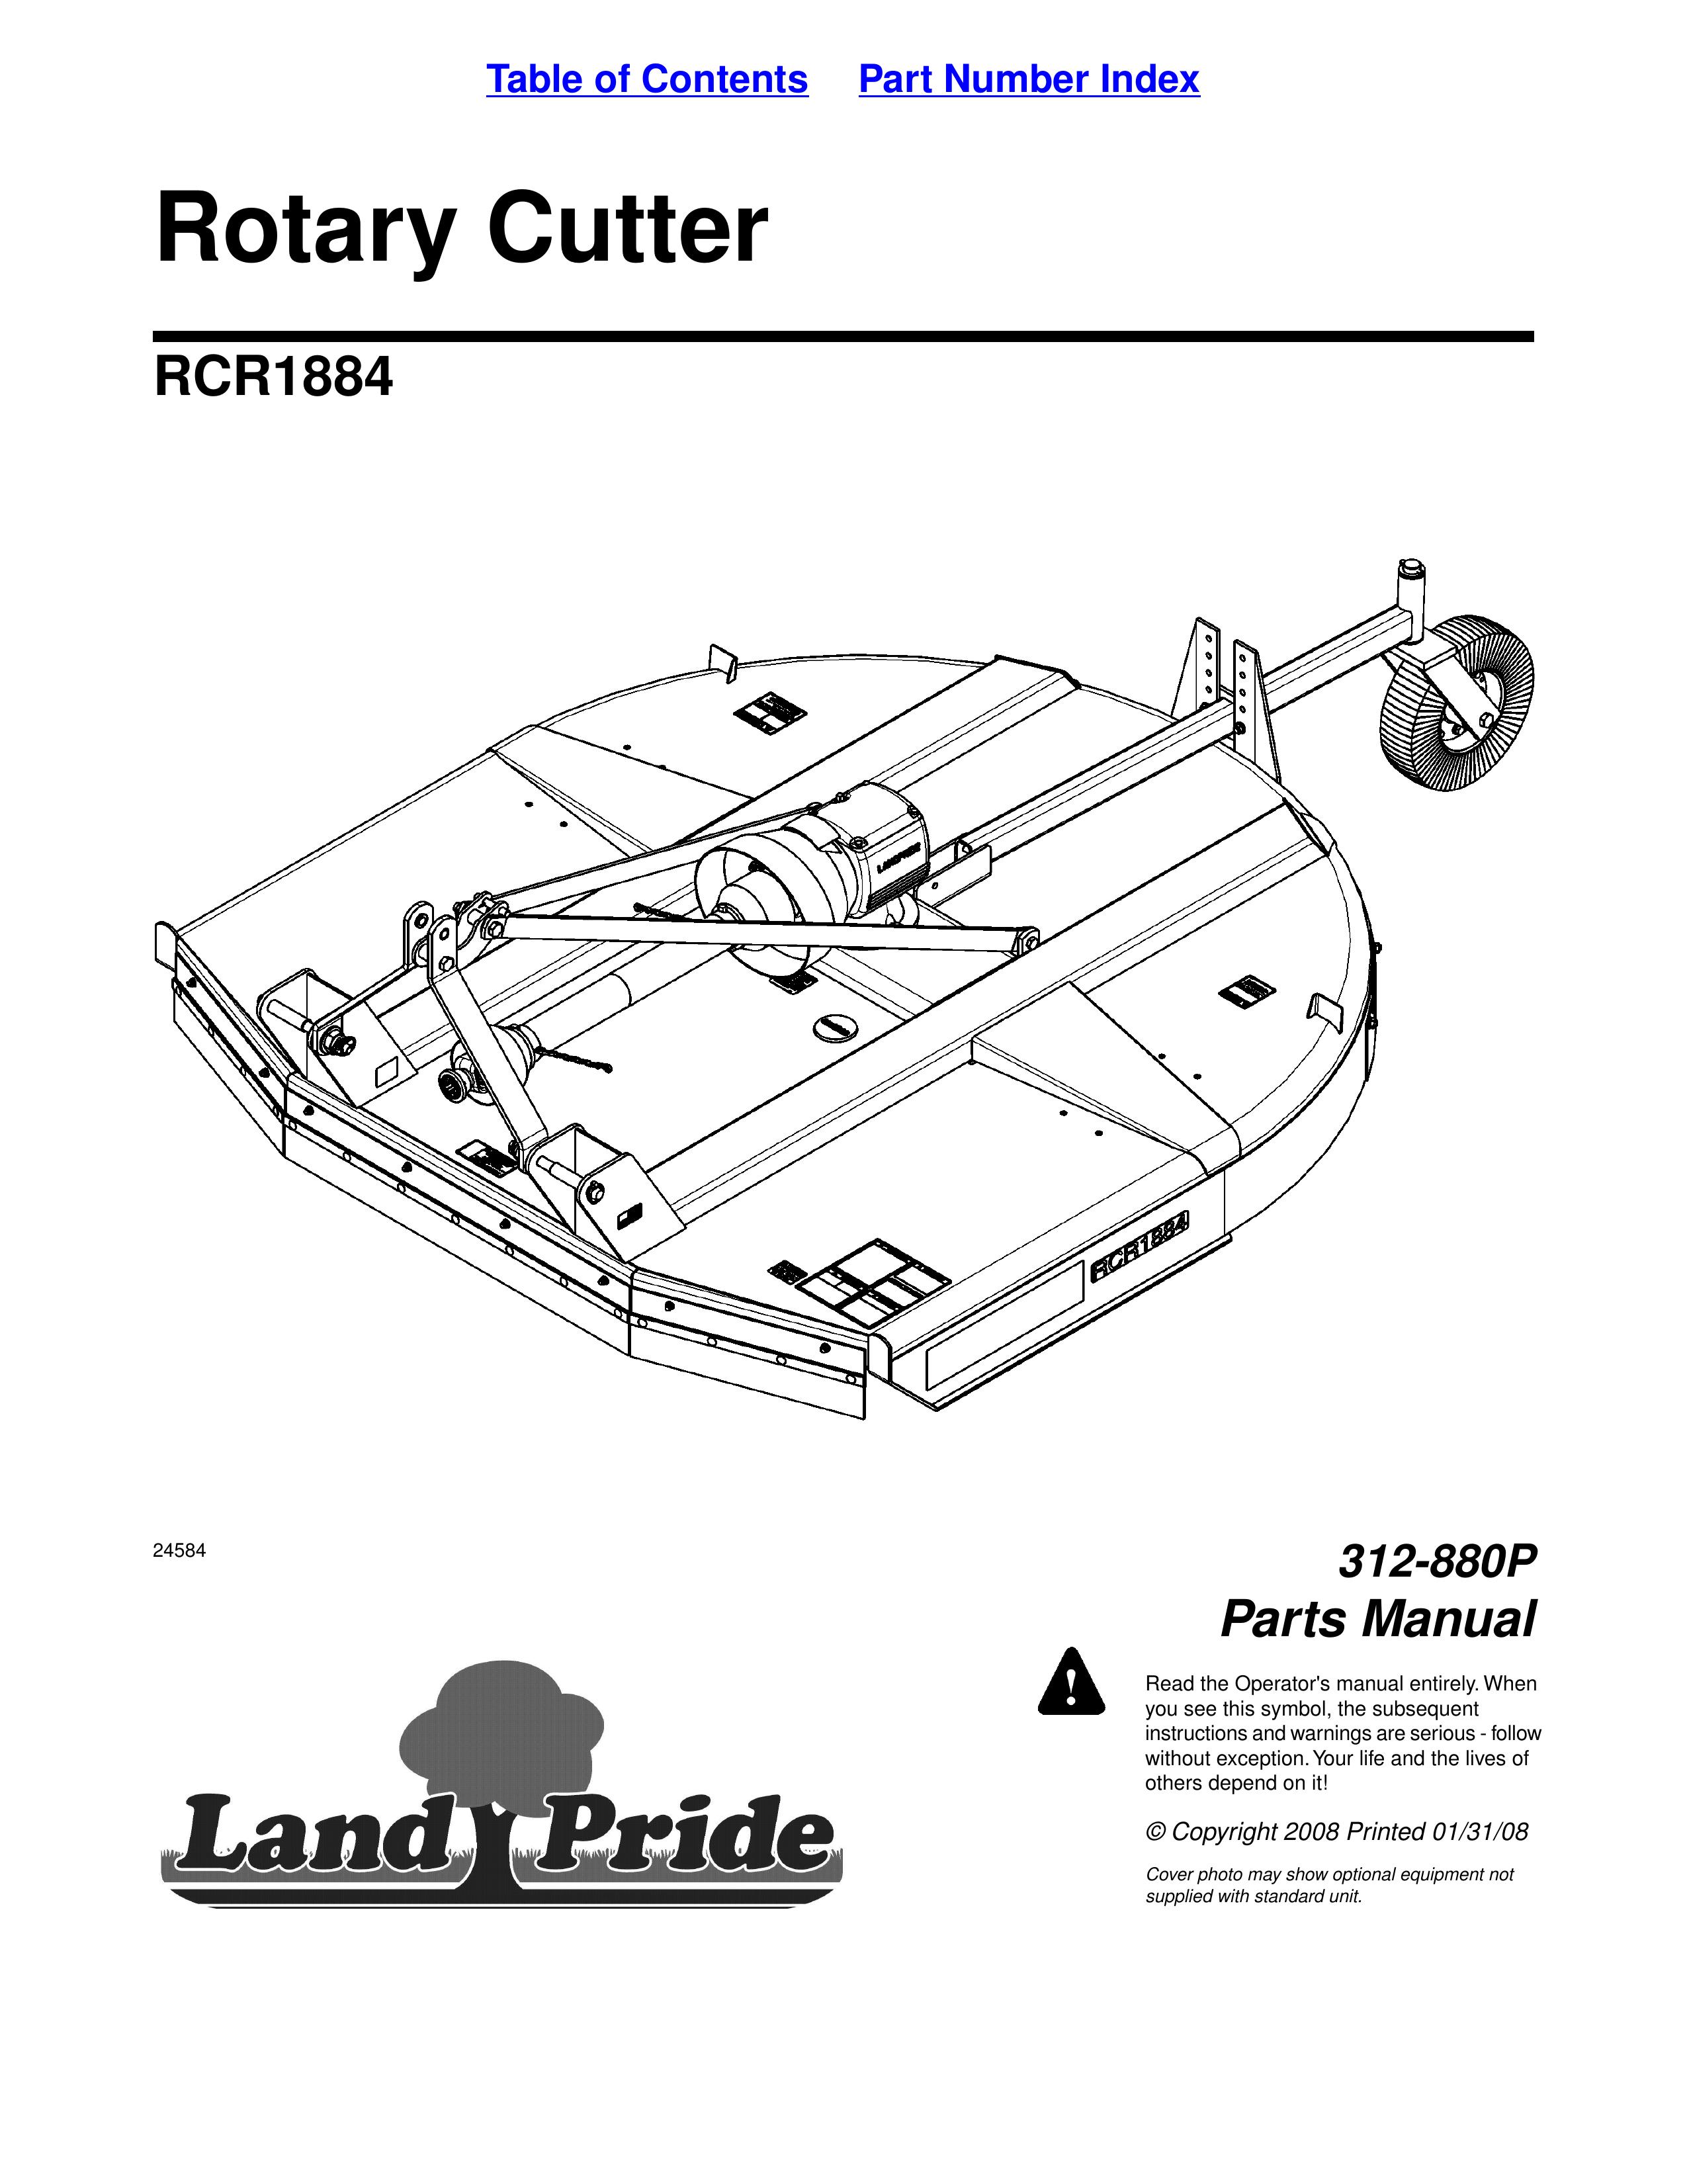 Land Pride RCR1884 Lawn Mower Accessory User Manual